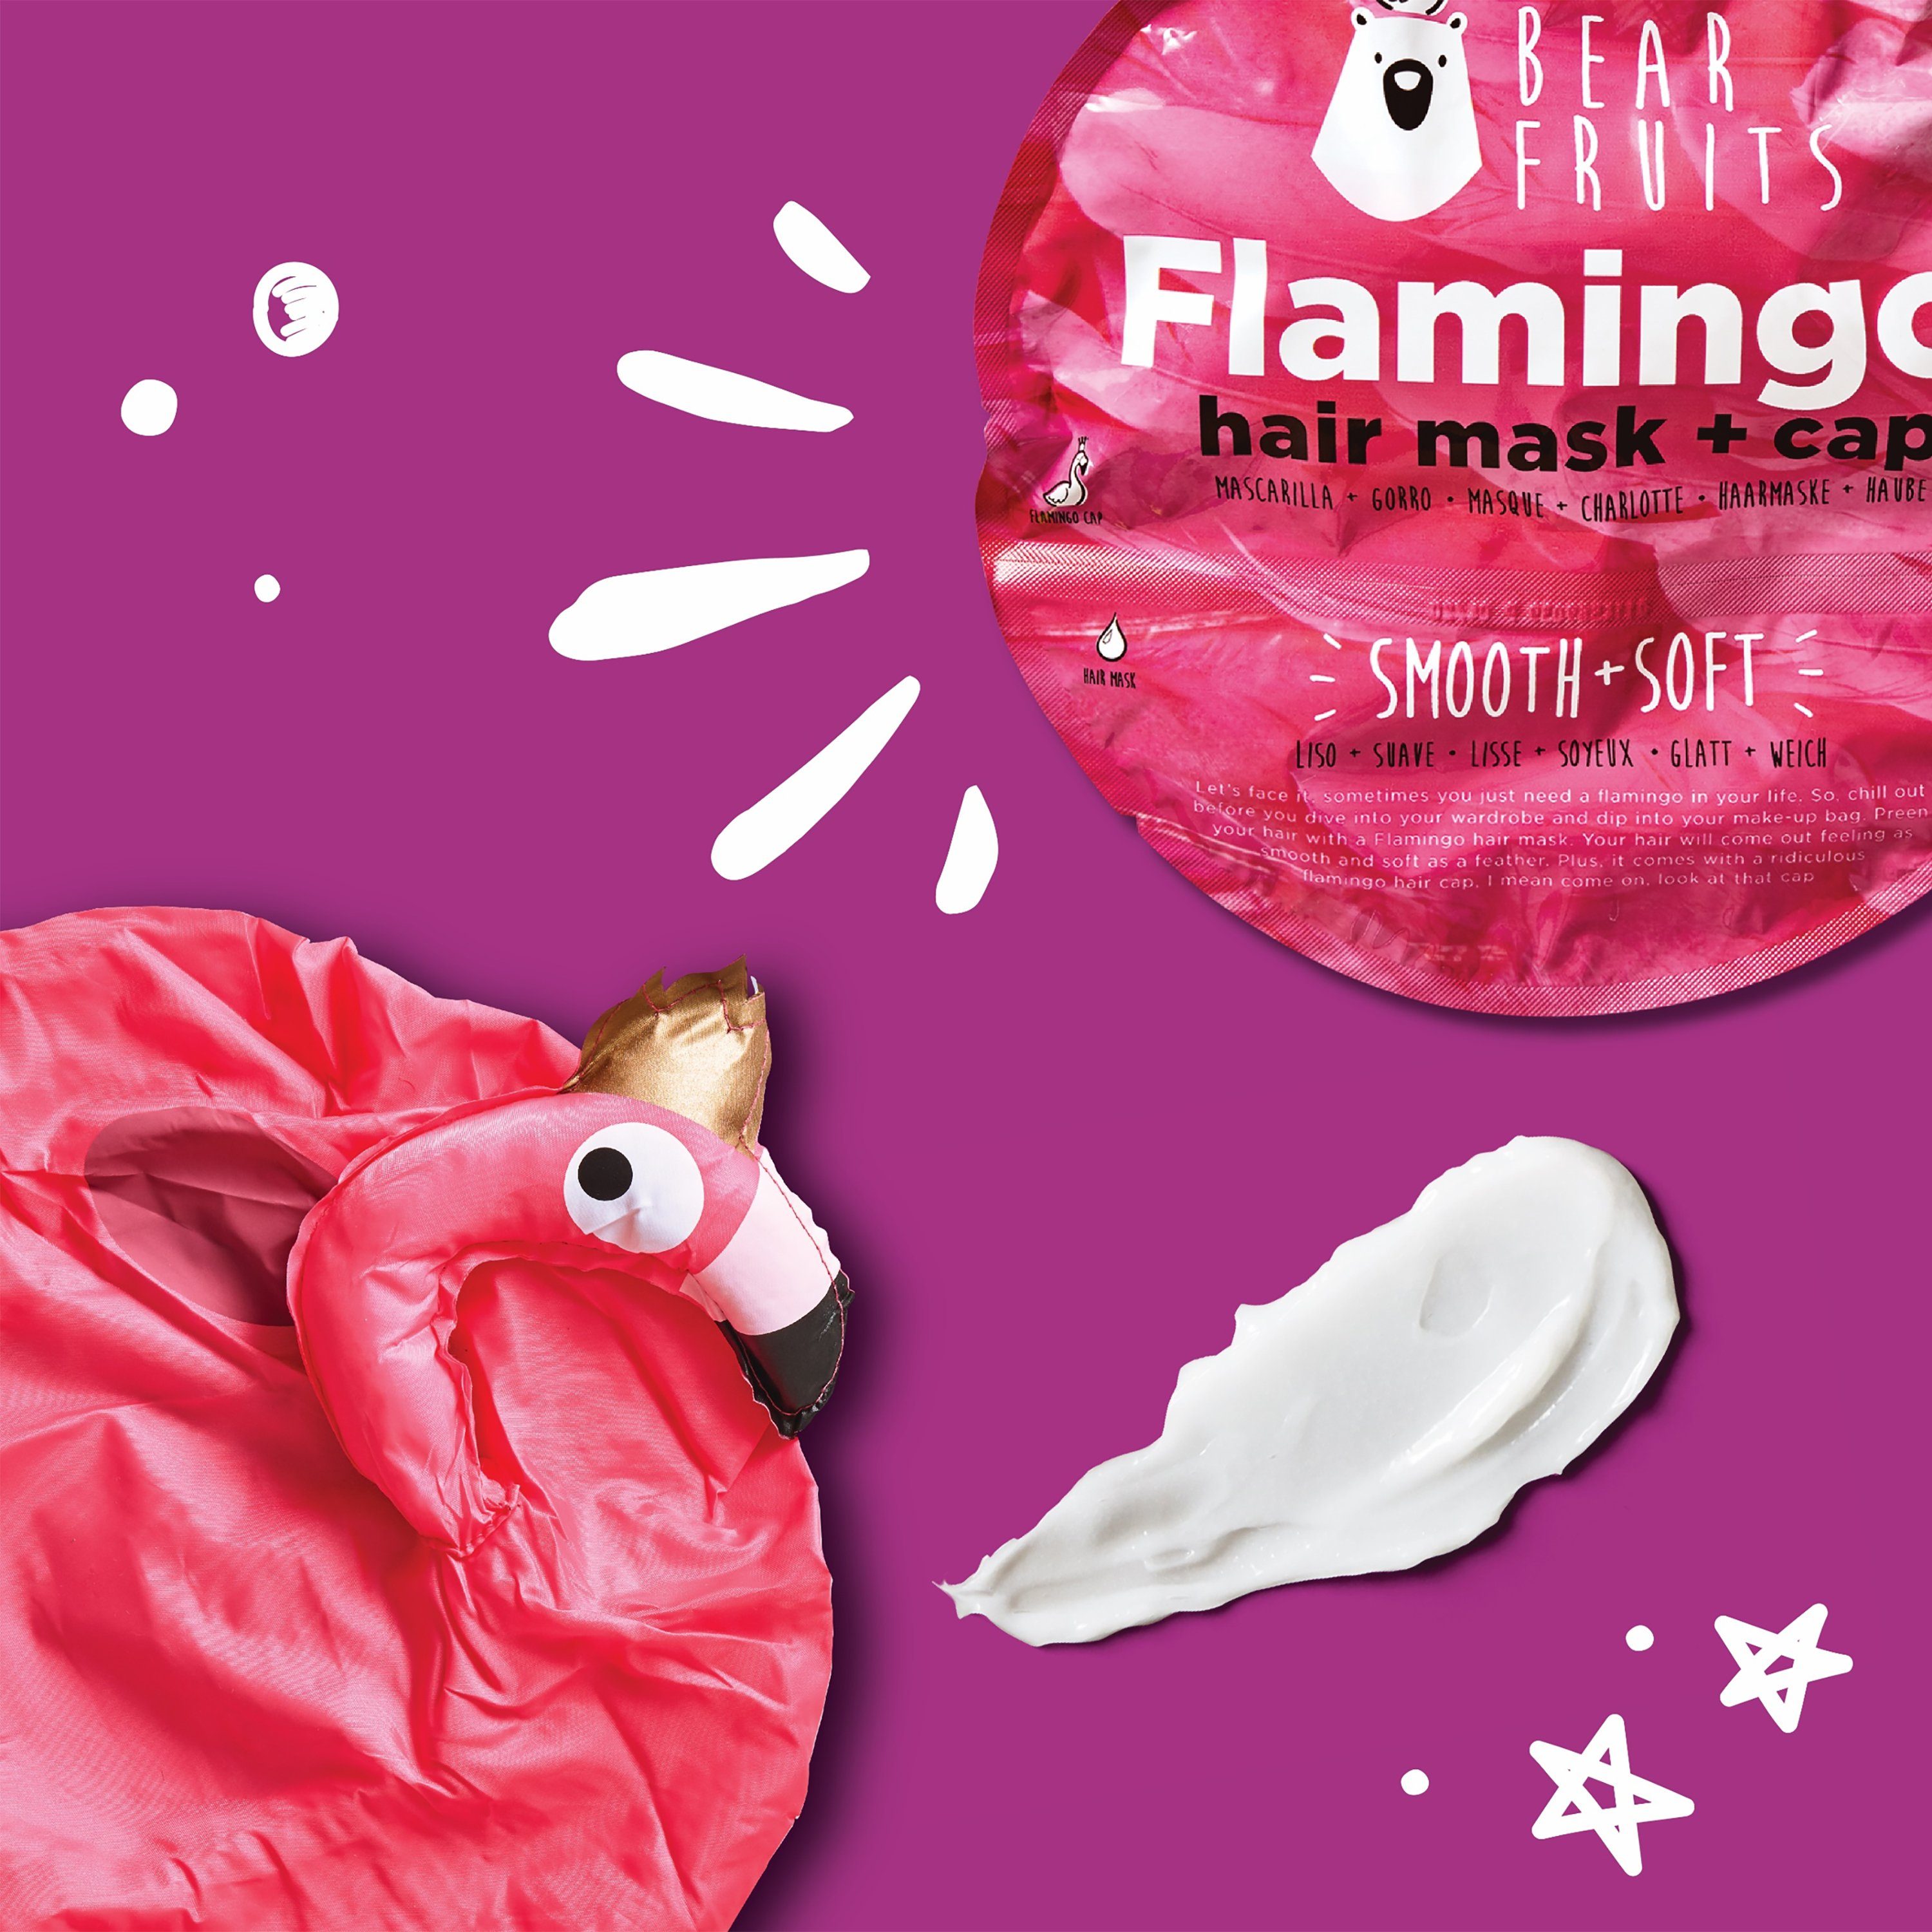 Bear Fruits Hair mask - Haarkur cap Flamingo 